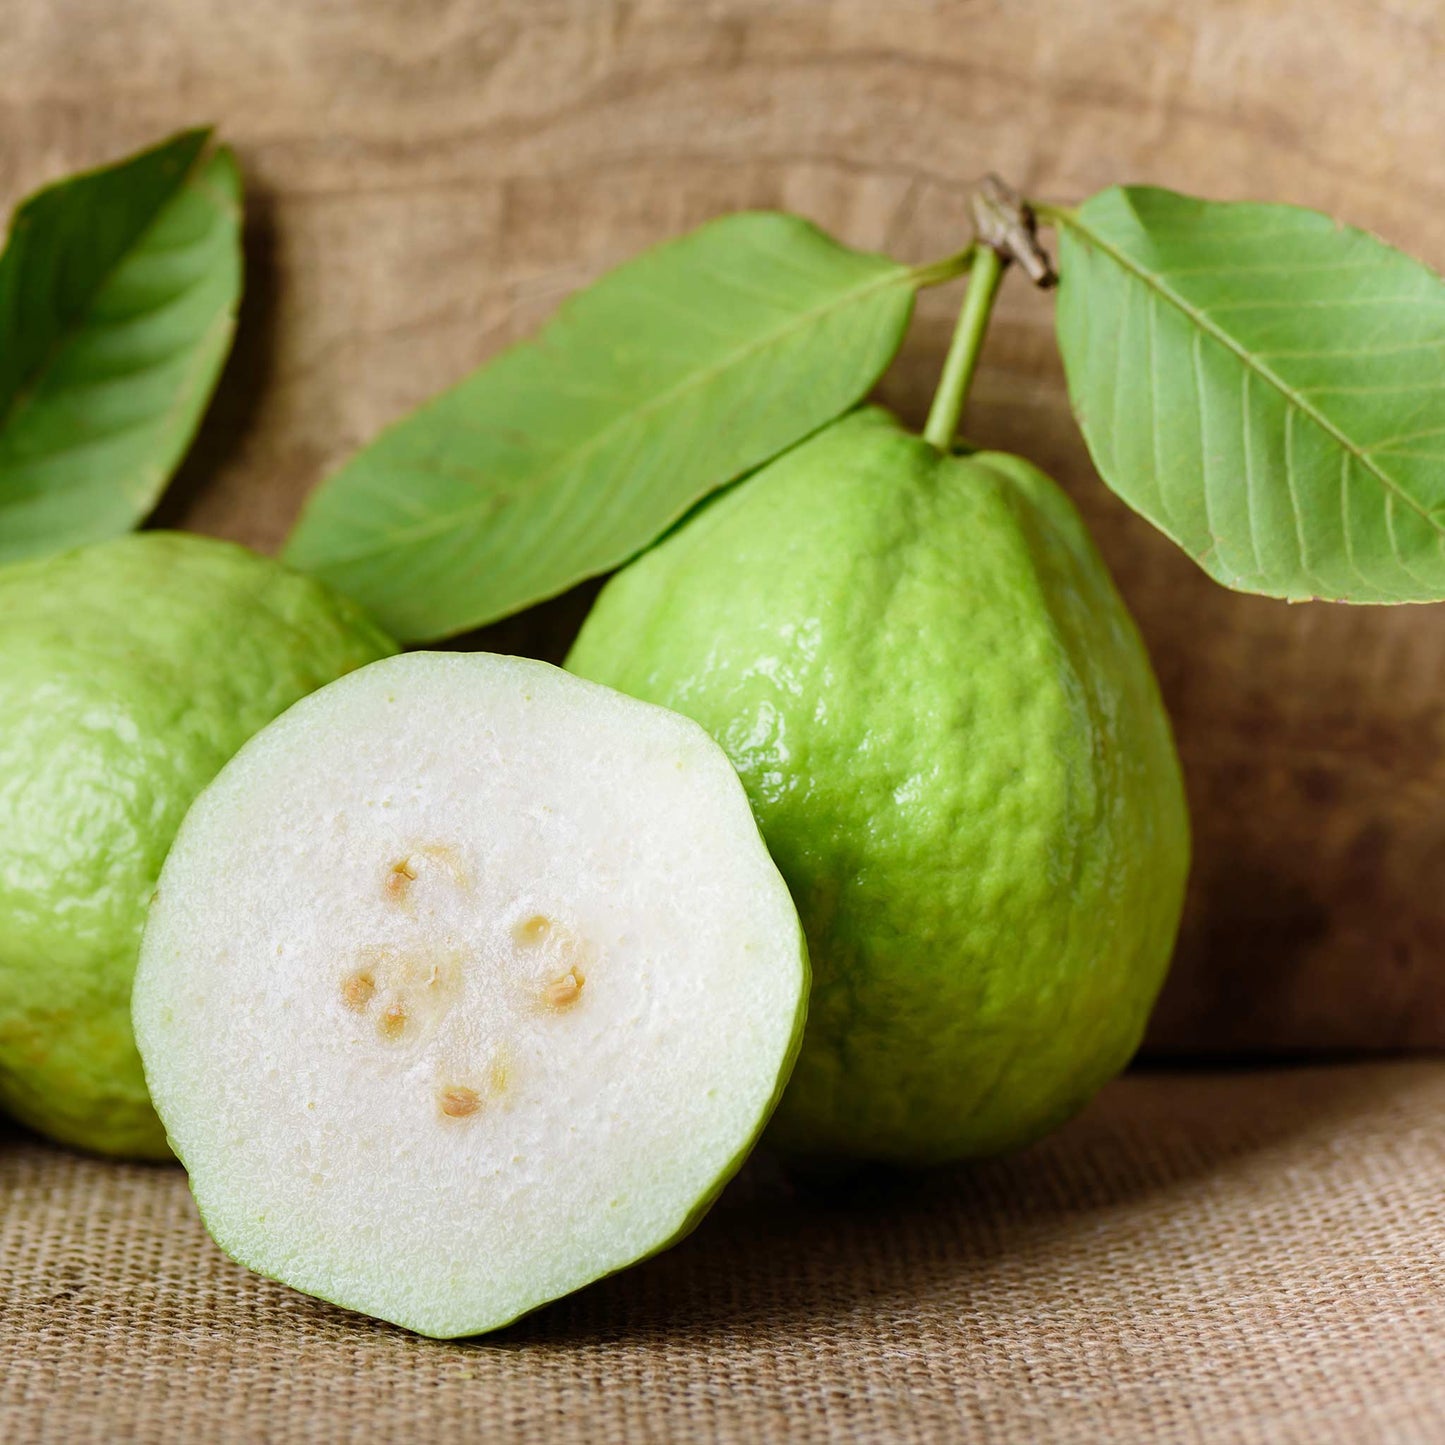 Guava Tree - White